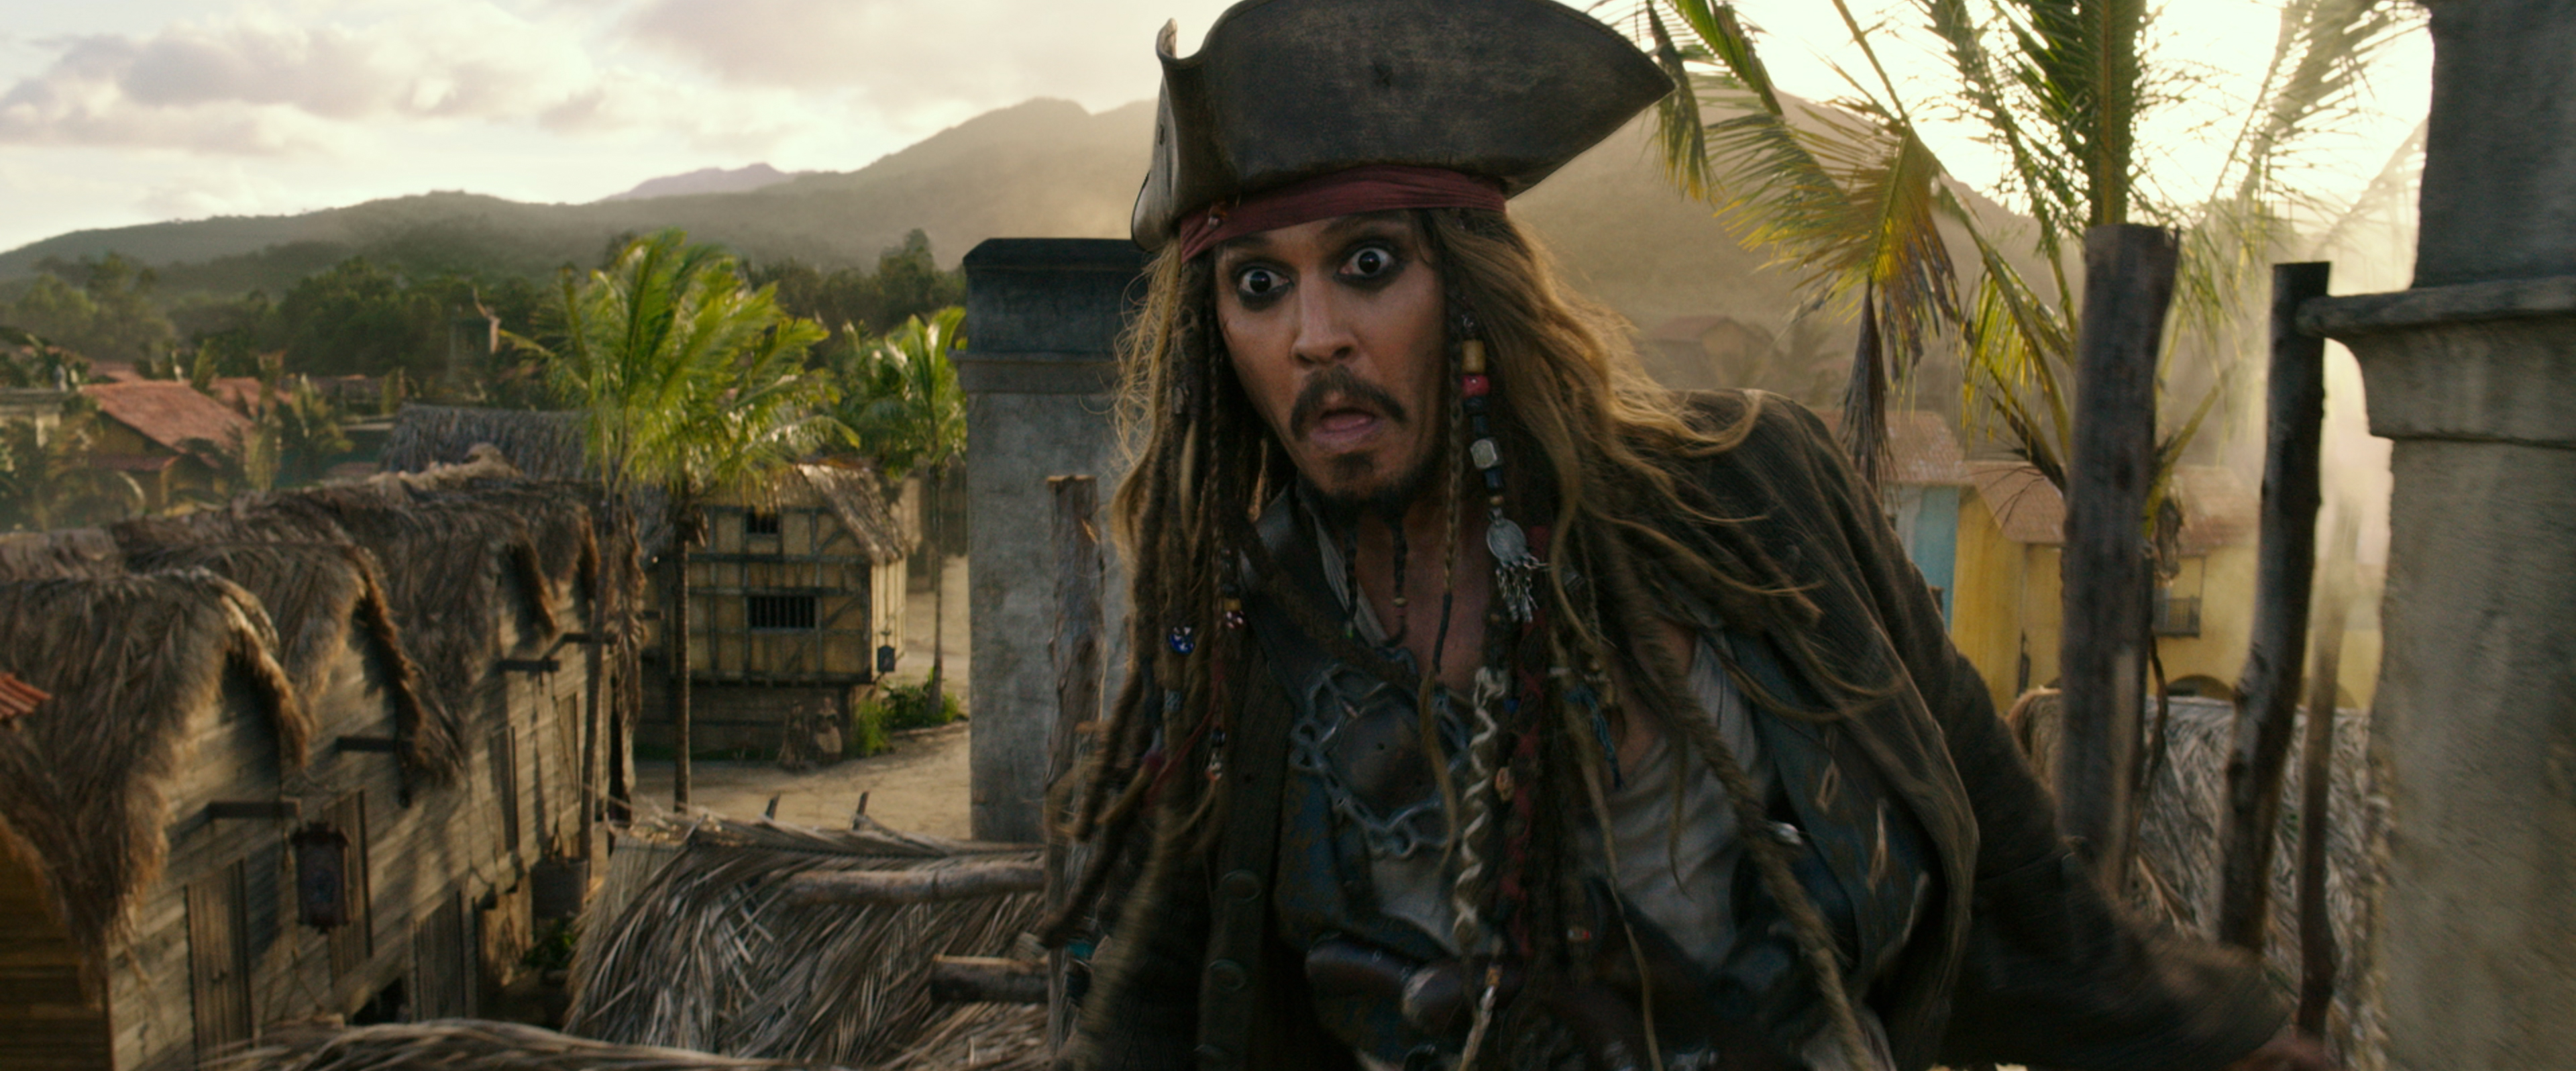 jack sparrow, movie, pirates of the caribbean: dead men tell no tales, johnny depp